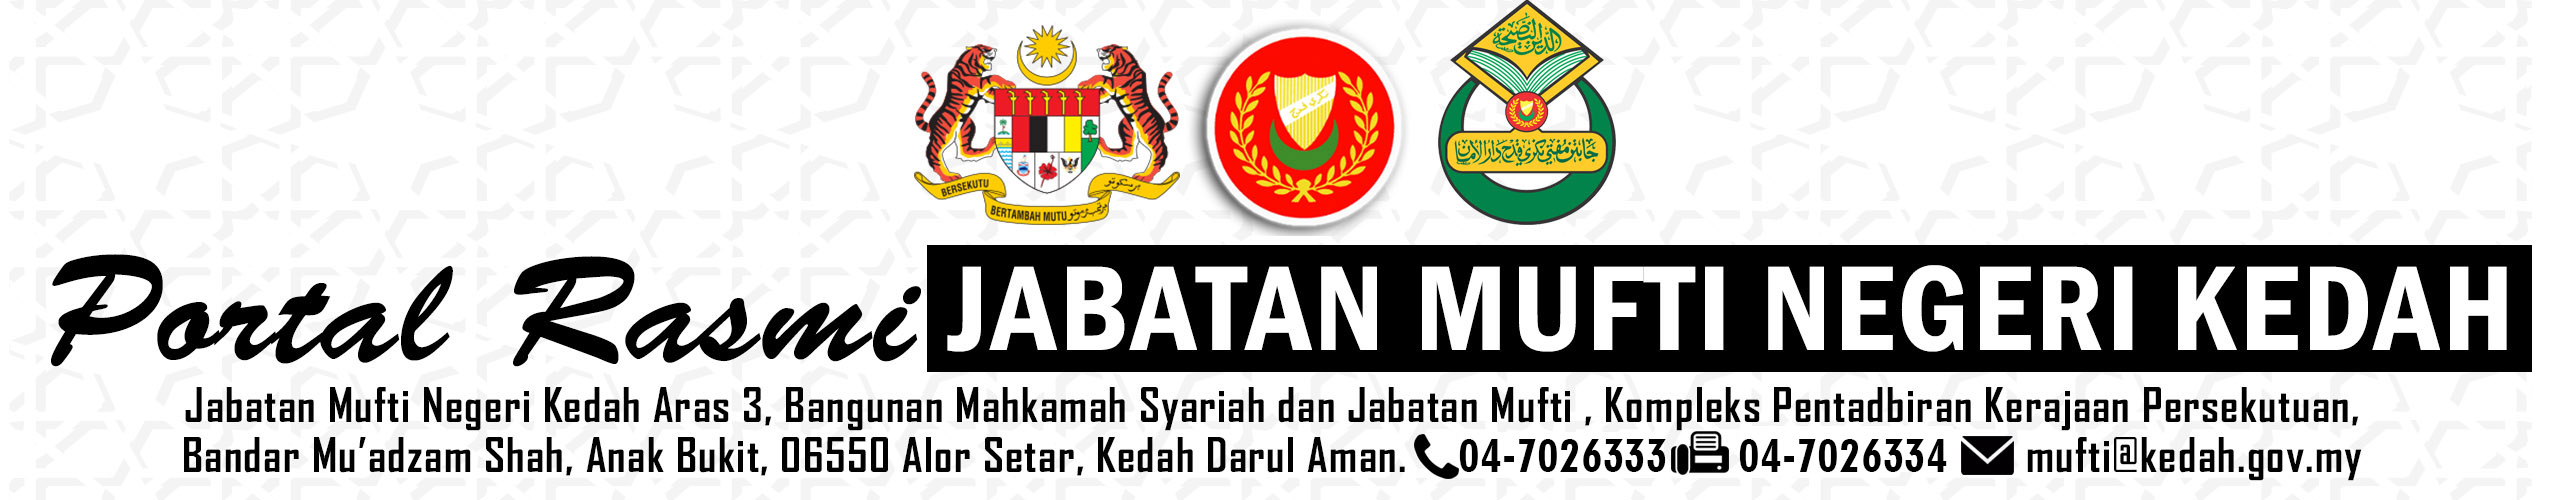 banner atas mufti new